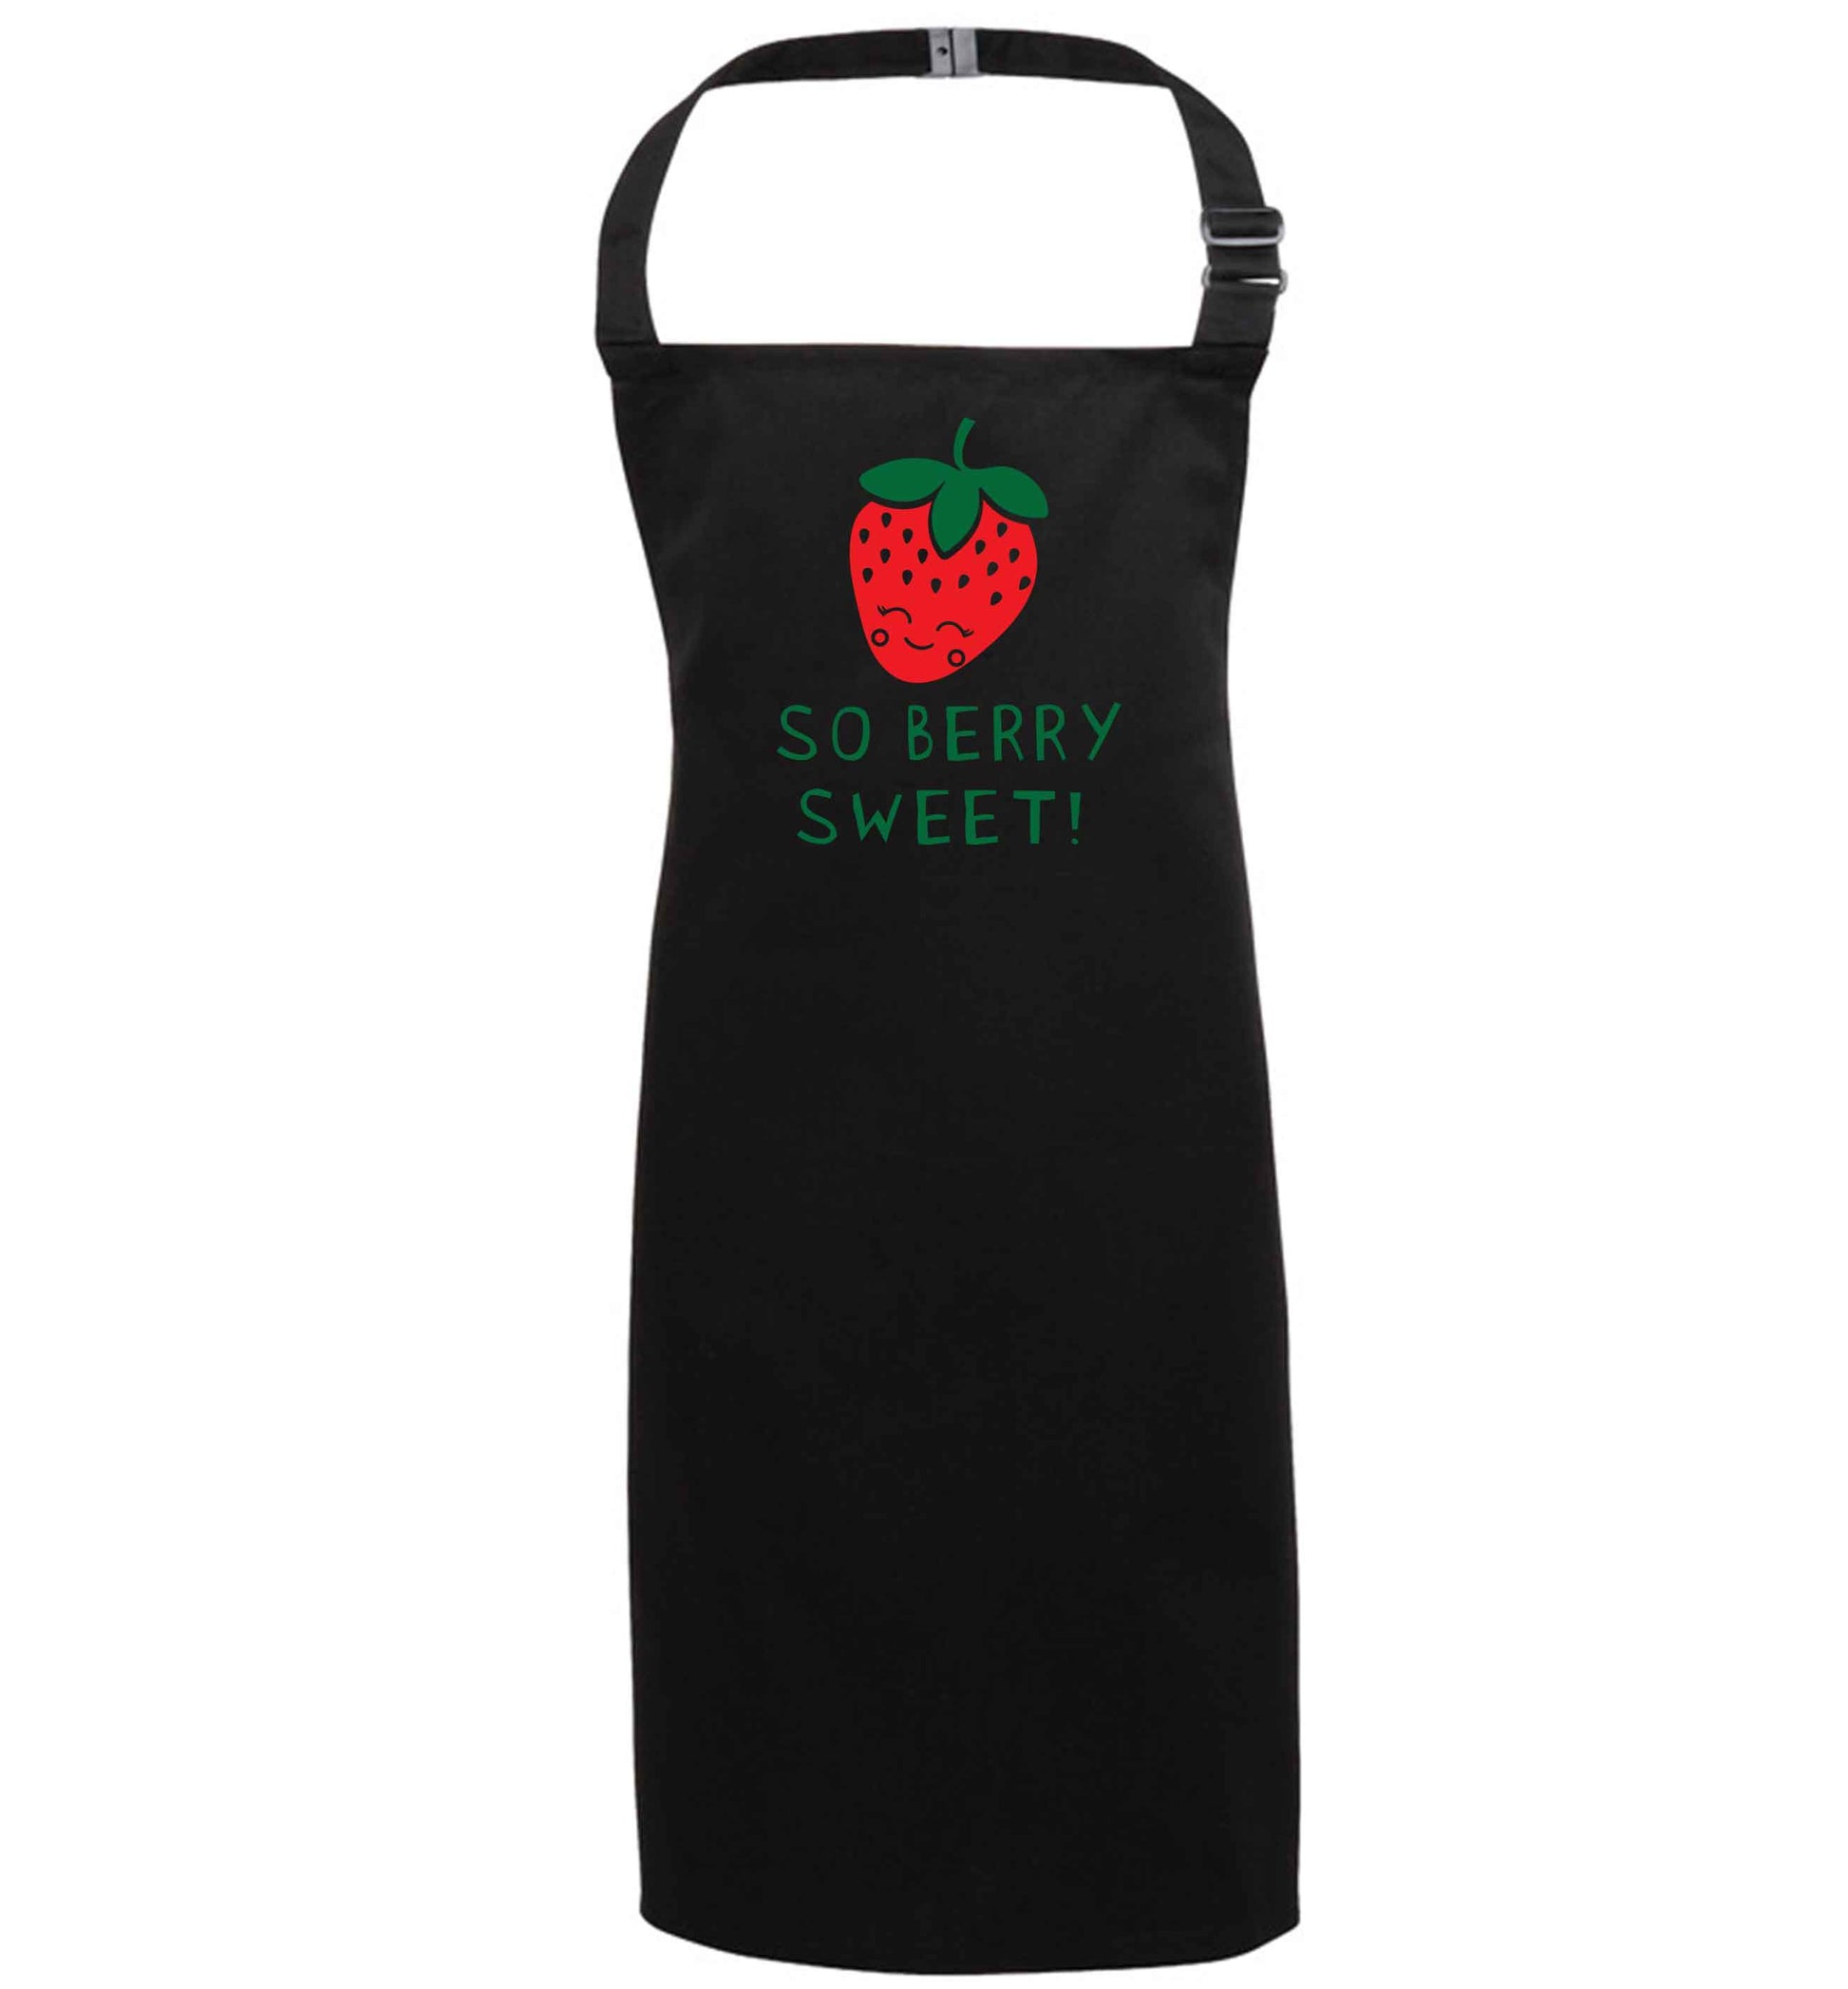 So berry sweet black apron 7-10 years